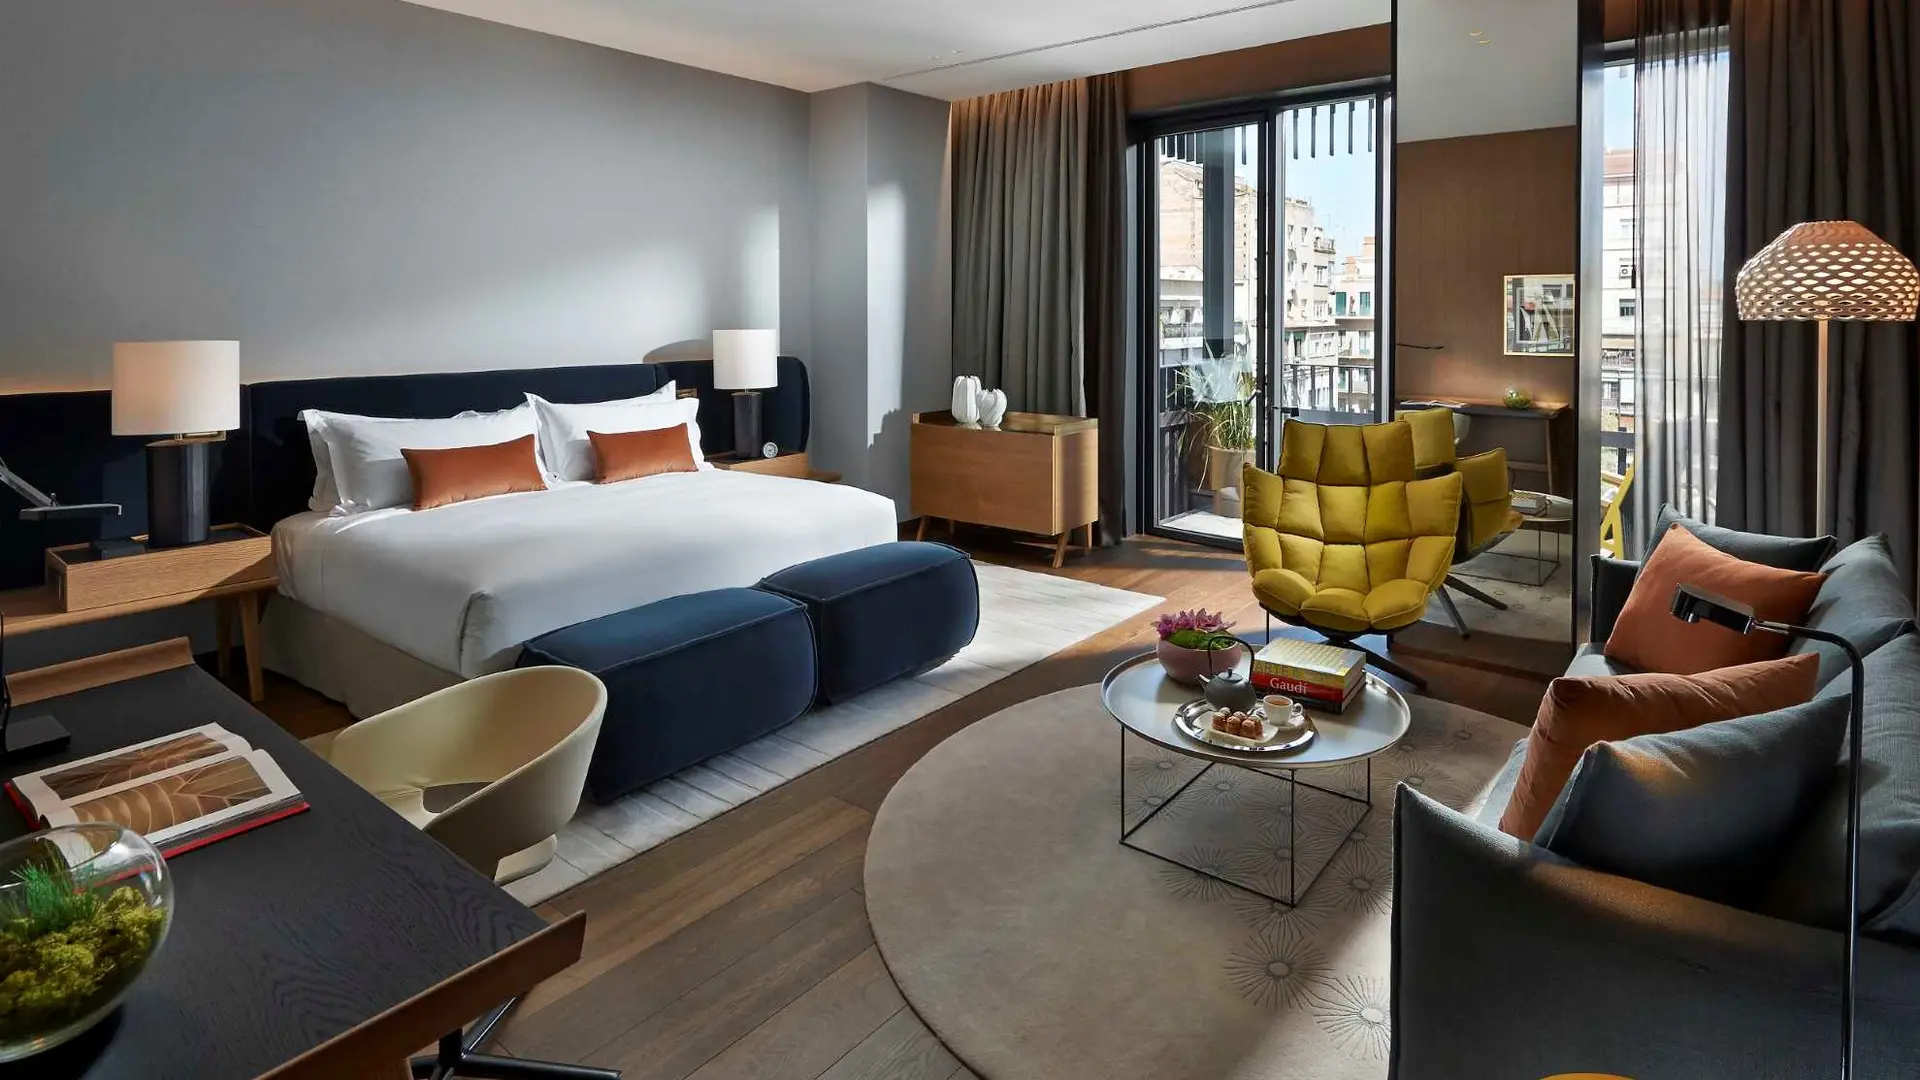 Hotel review Accommodation' - Mandarin Oriental Barcelona - 0